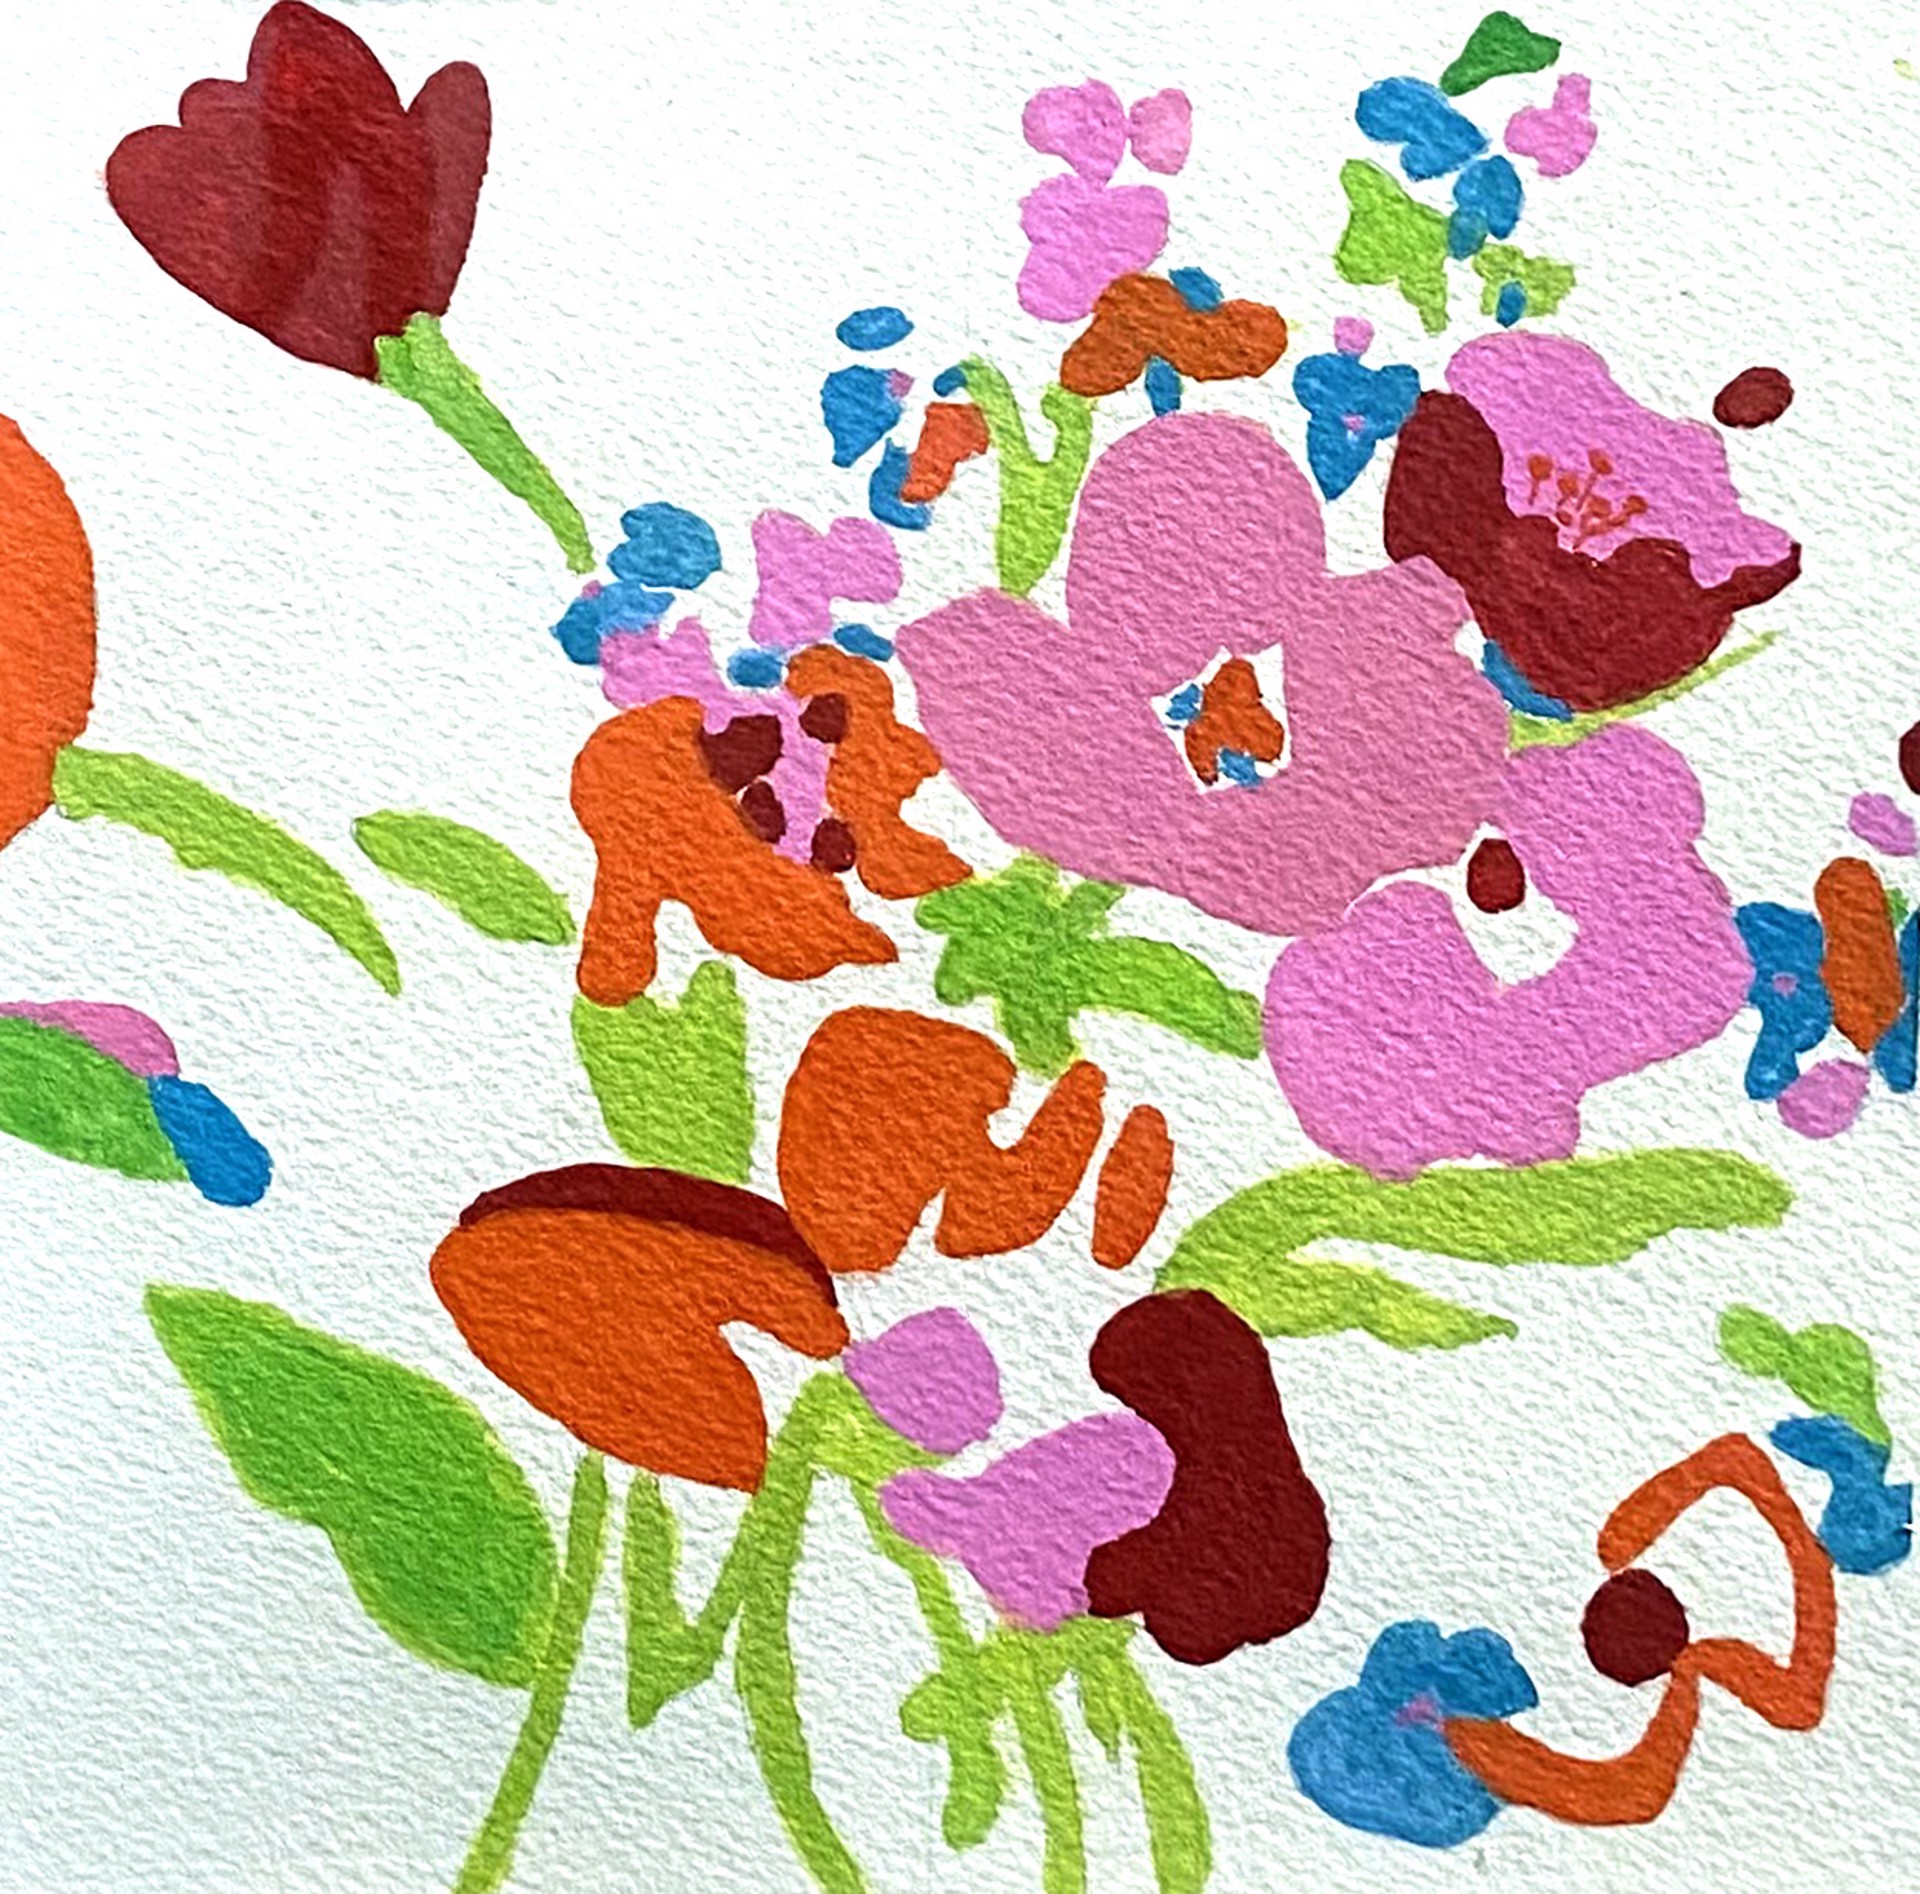 Flower II by Sybil Sylvester